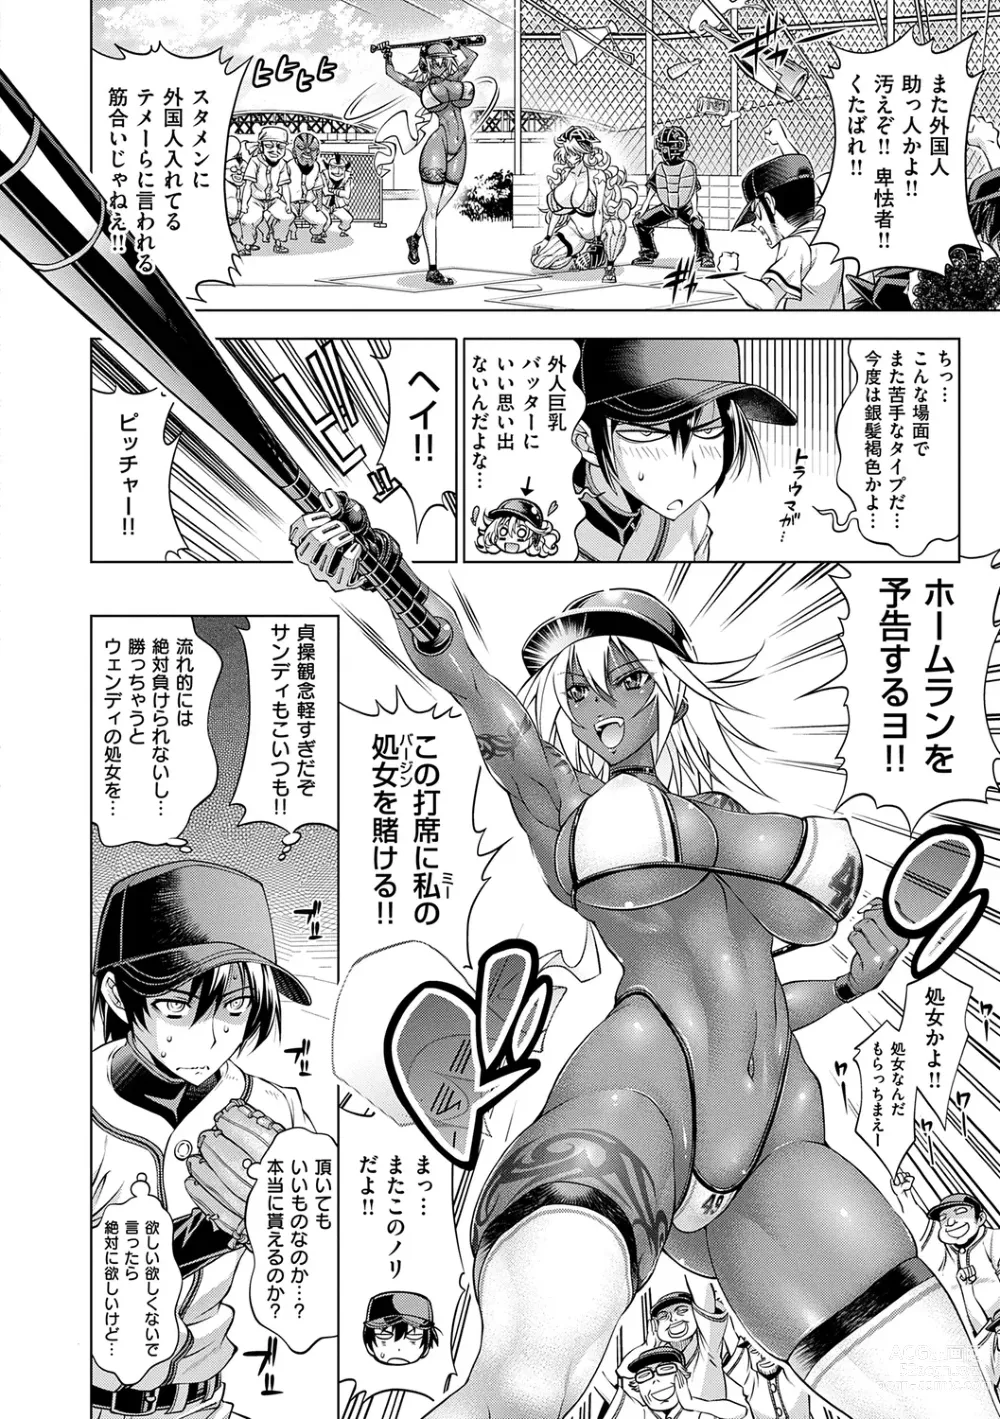 Page 14 of manga Suketto Sanjou!!